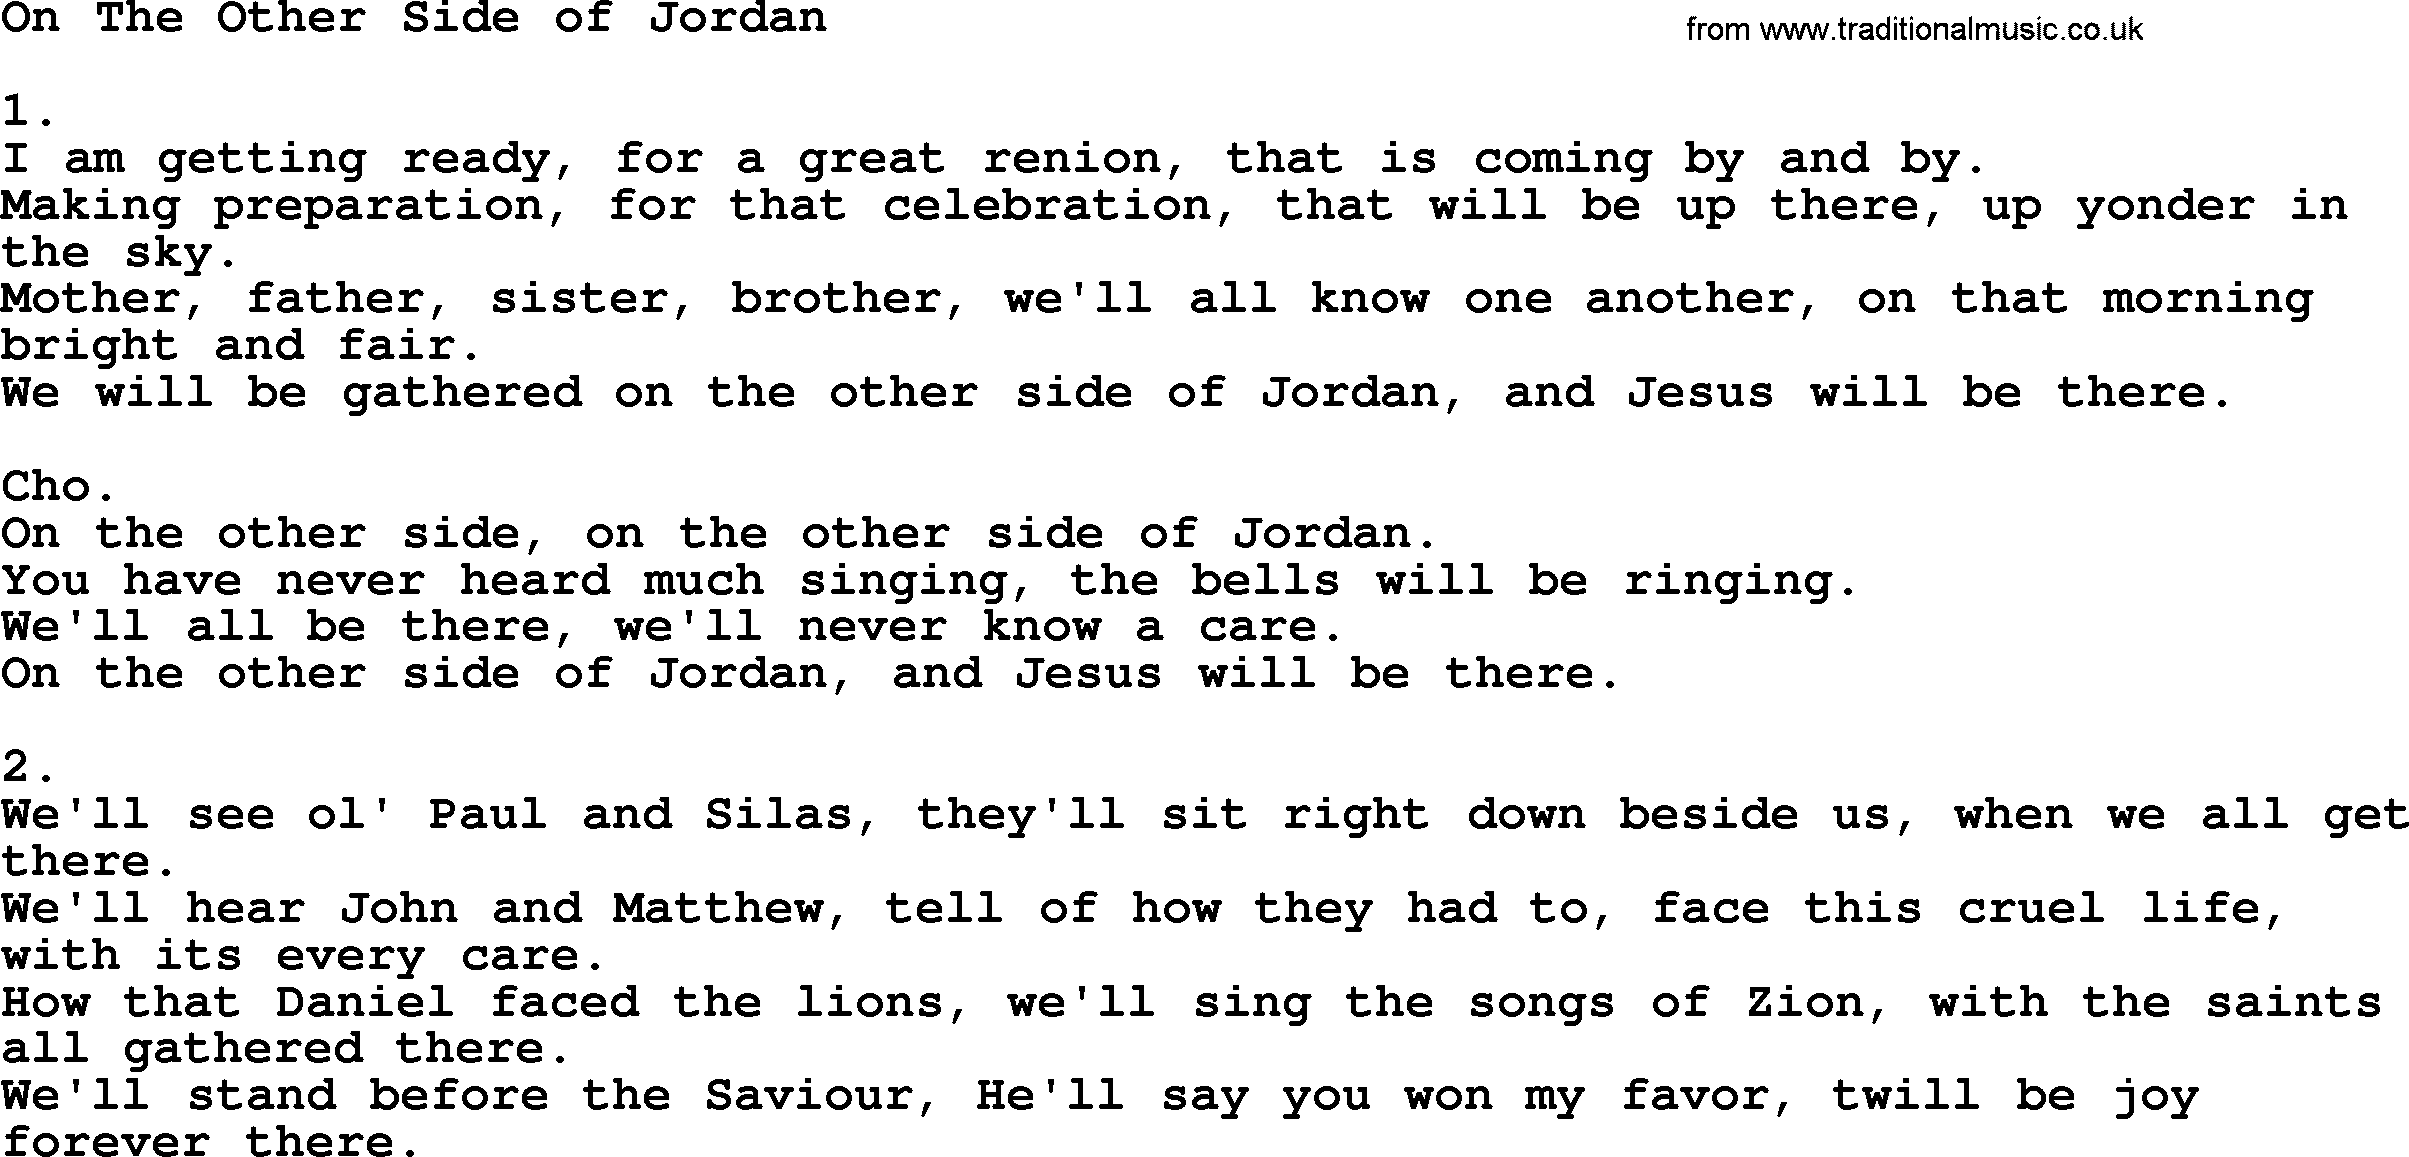 Apostolic & Pentecostal Hymns and Songs, Hymn: On The Other Side of Jordan lyrics and PDF